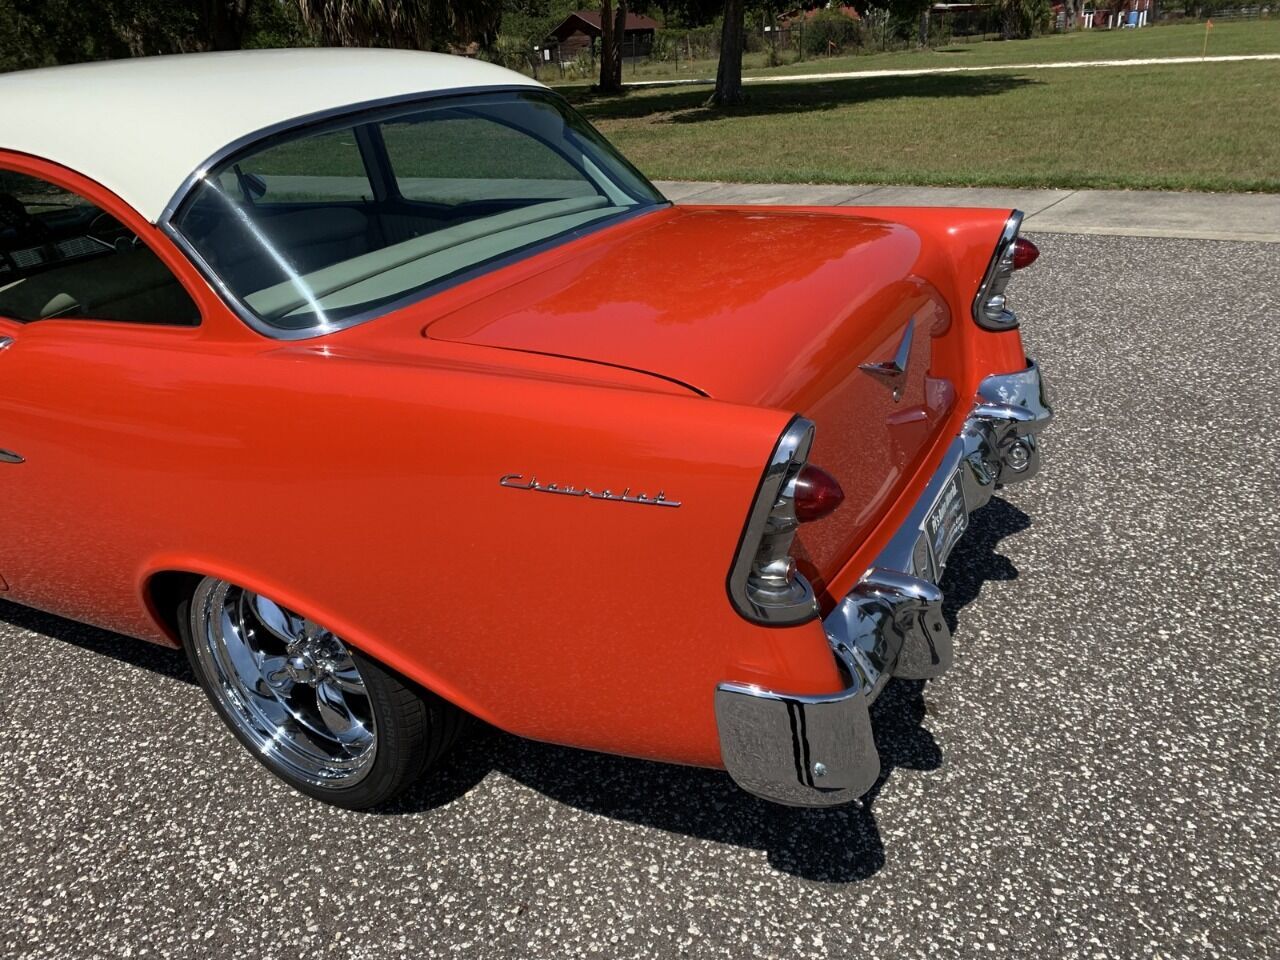 1956 Chevrolet 150 25